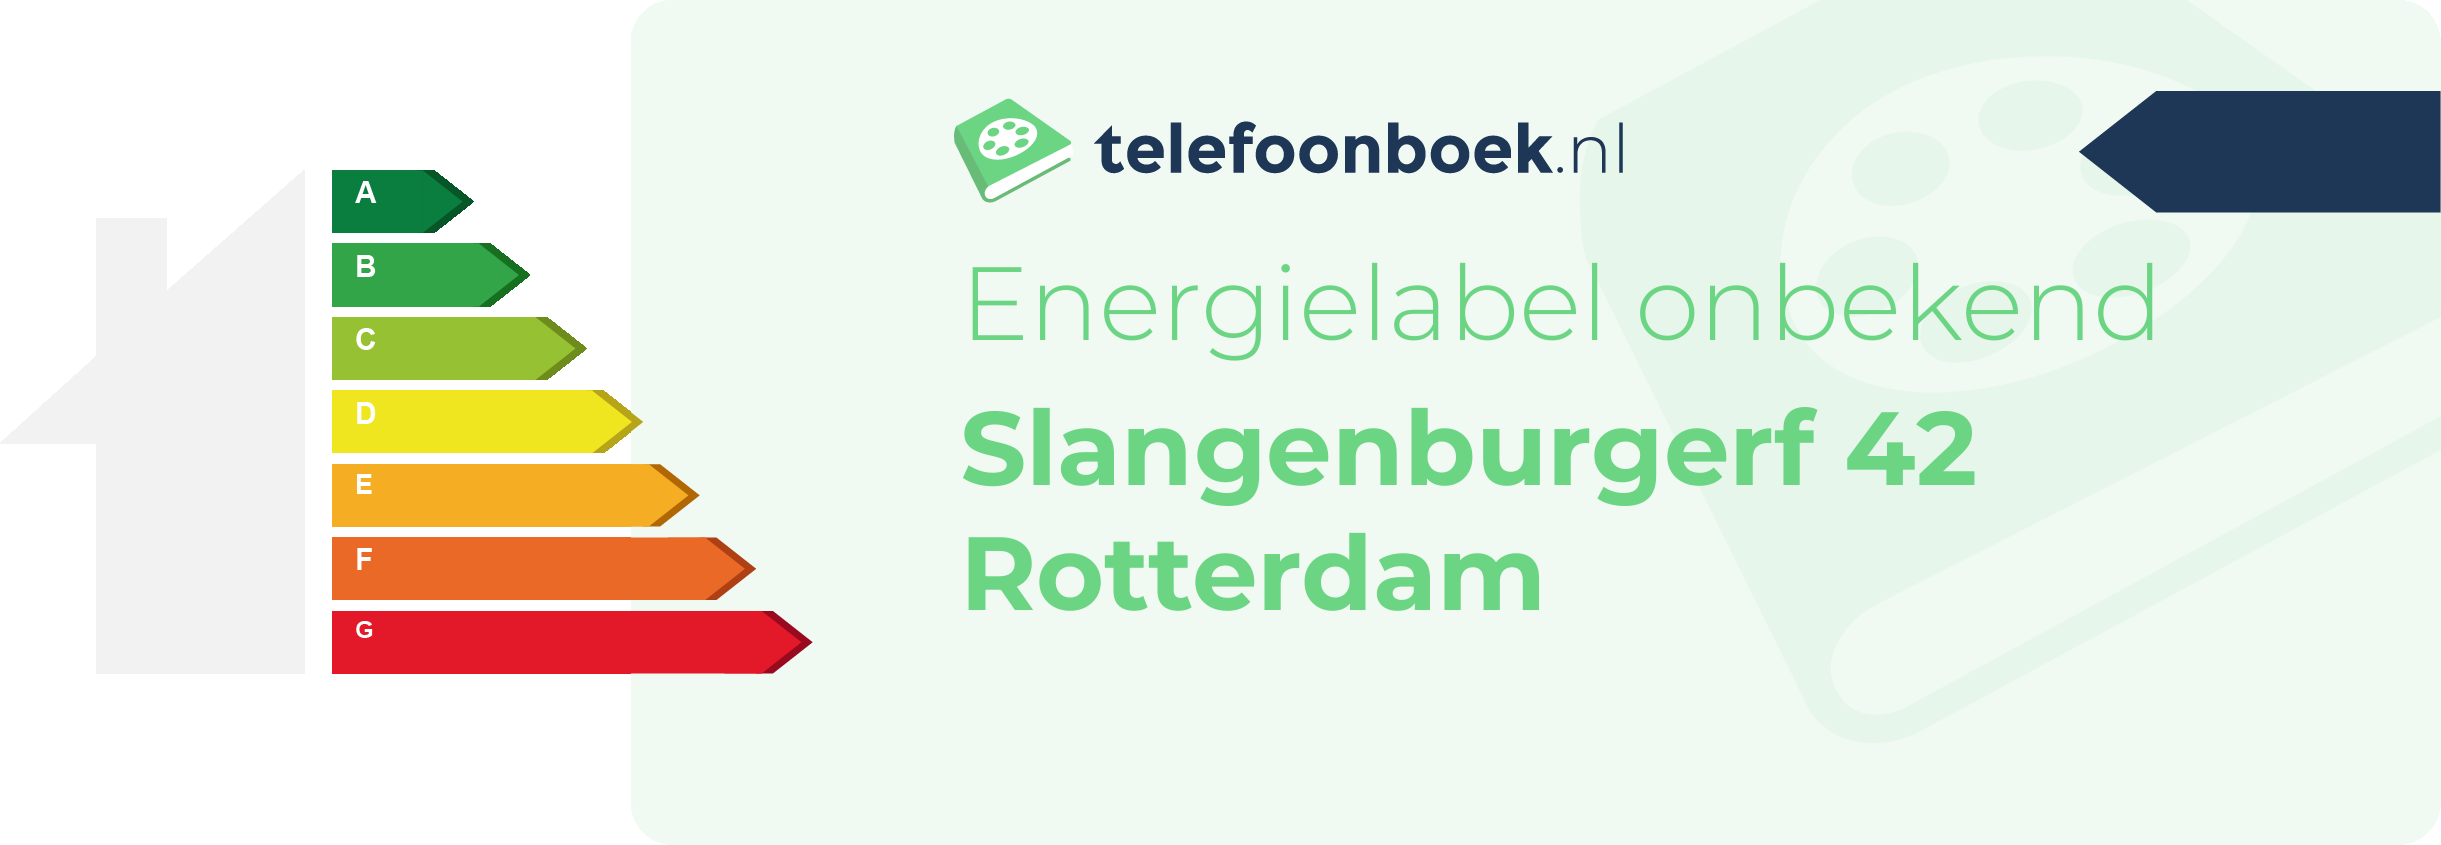 Energielabel Slangenburgerf 42 Rotterdam